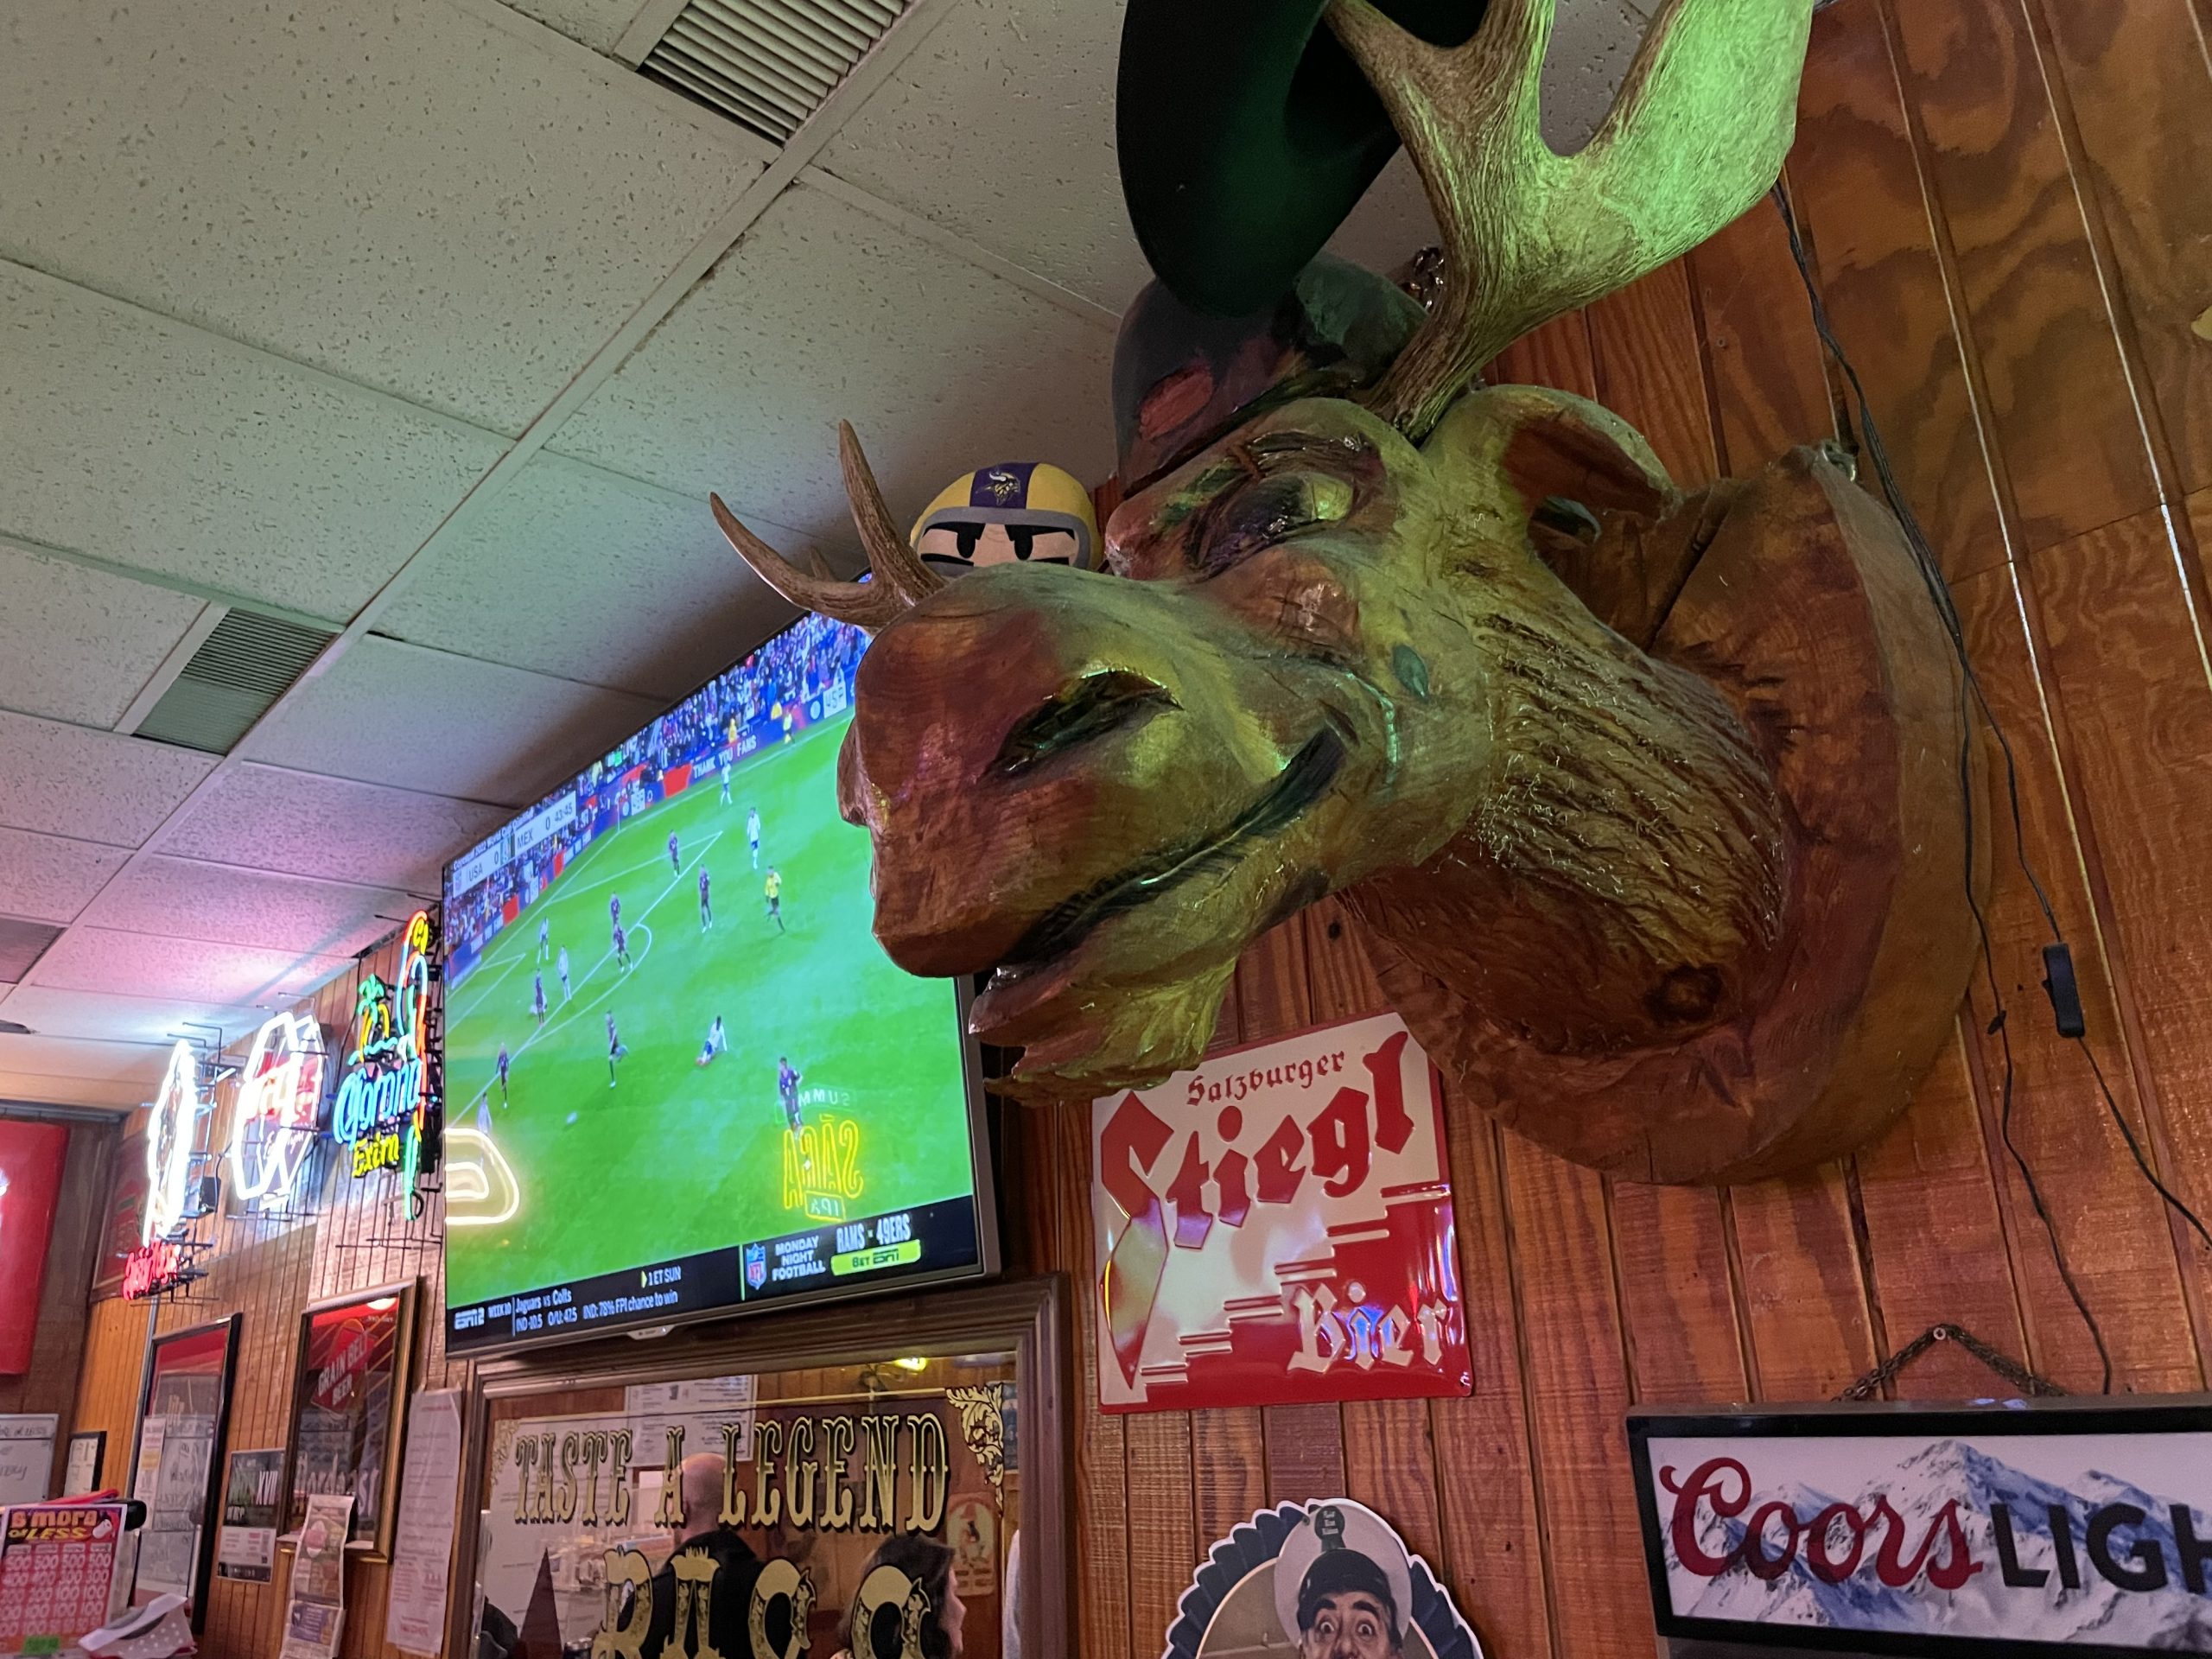 Moose Bar & Grill - Minneapolis Dive Bar - Carved Moose Head